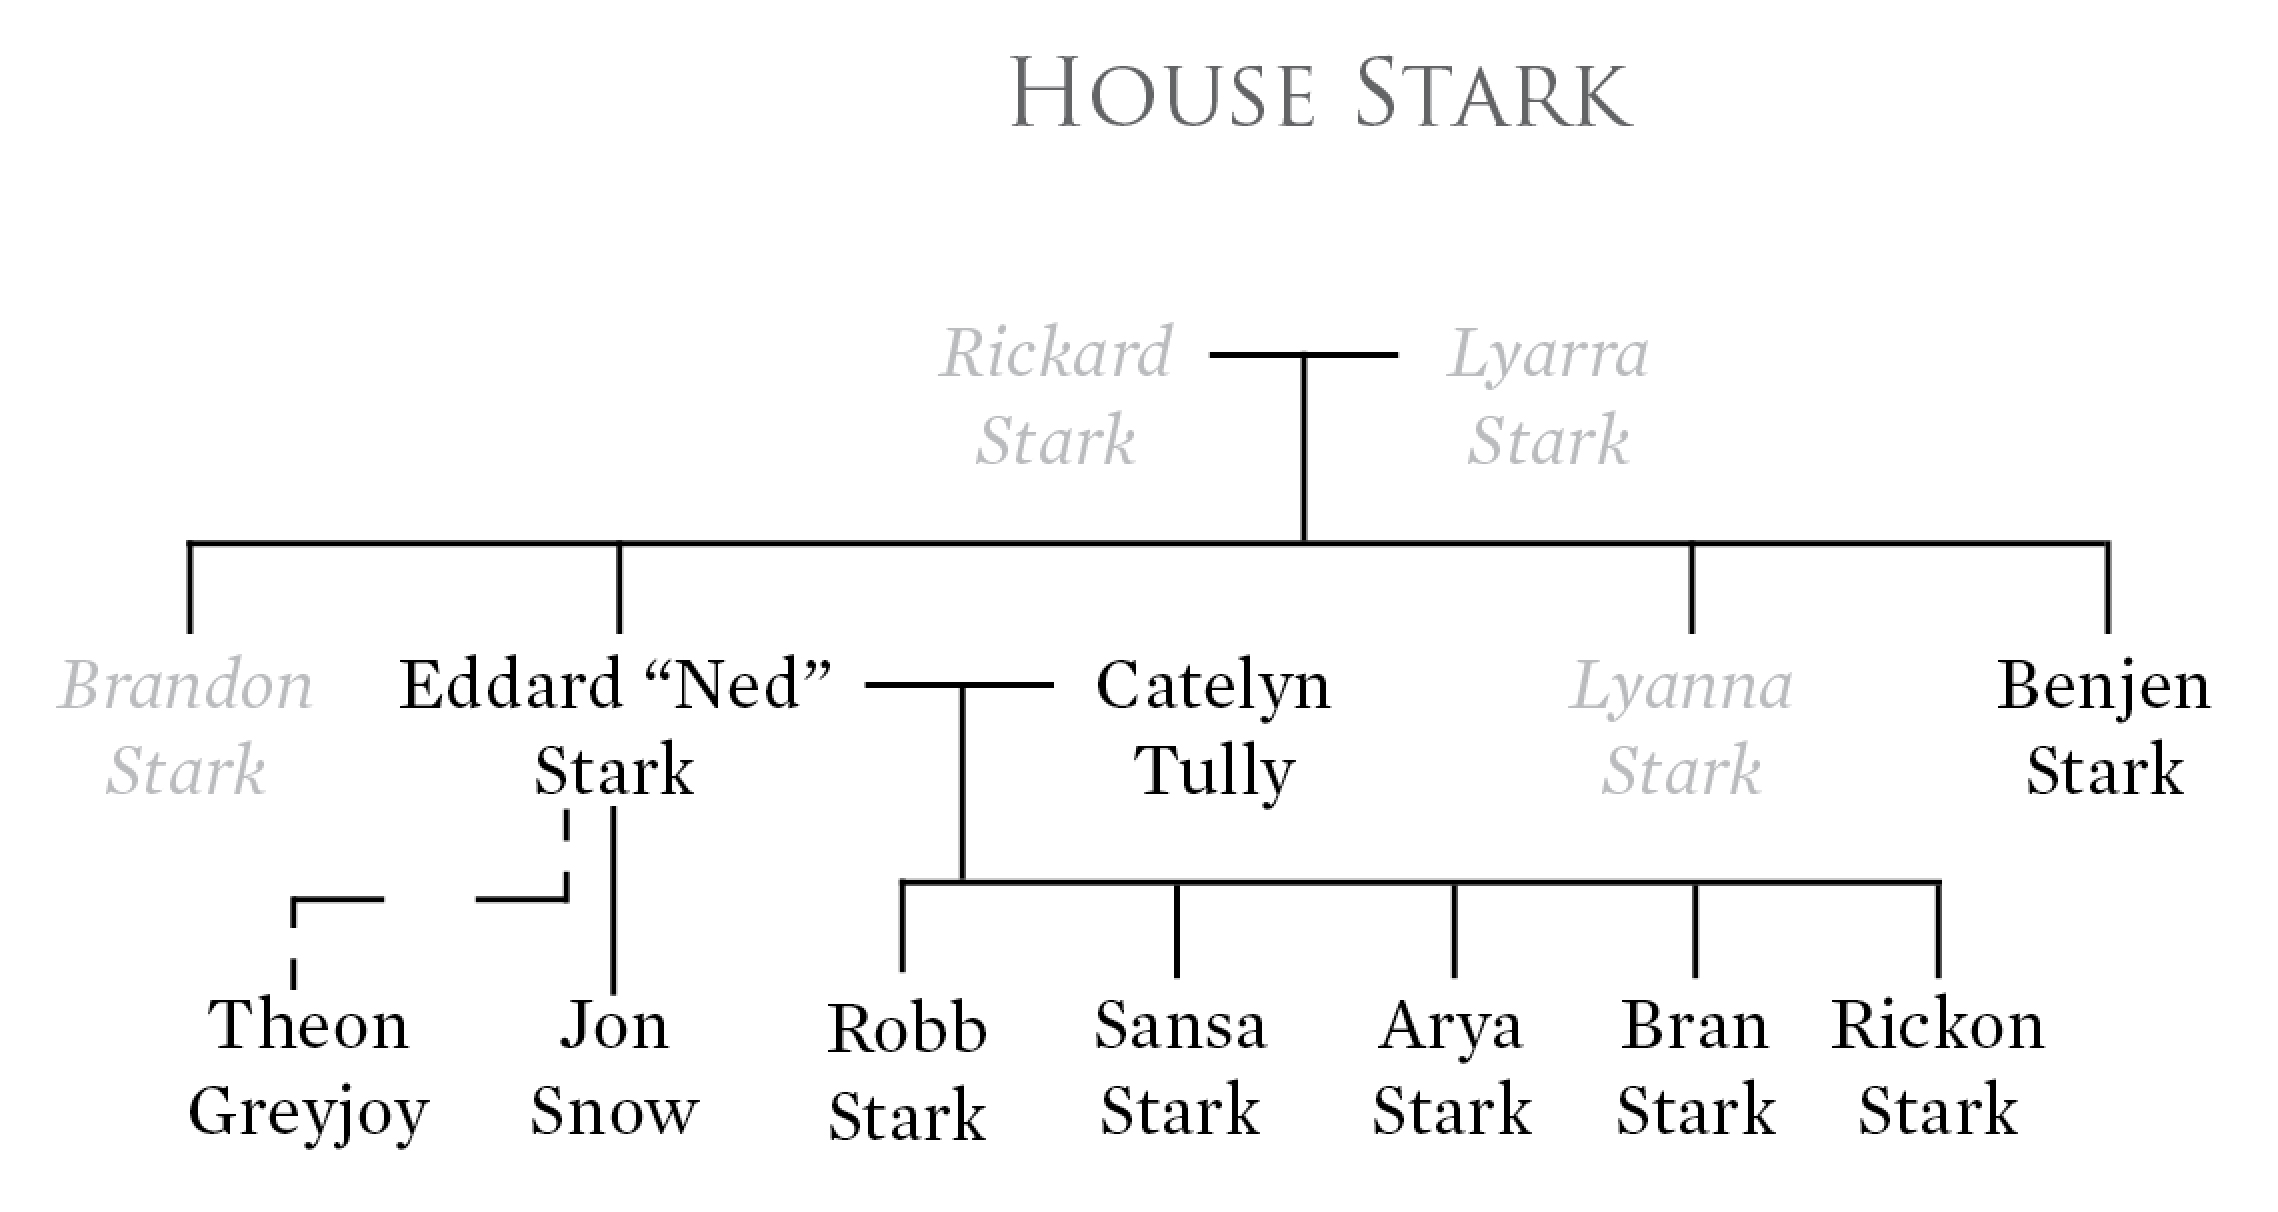 baratheon family tree